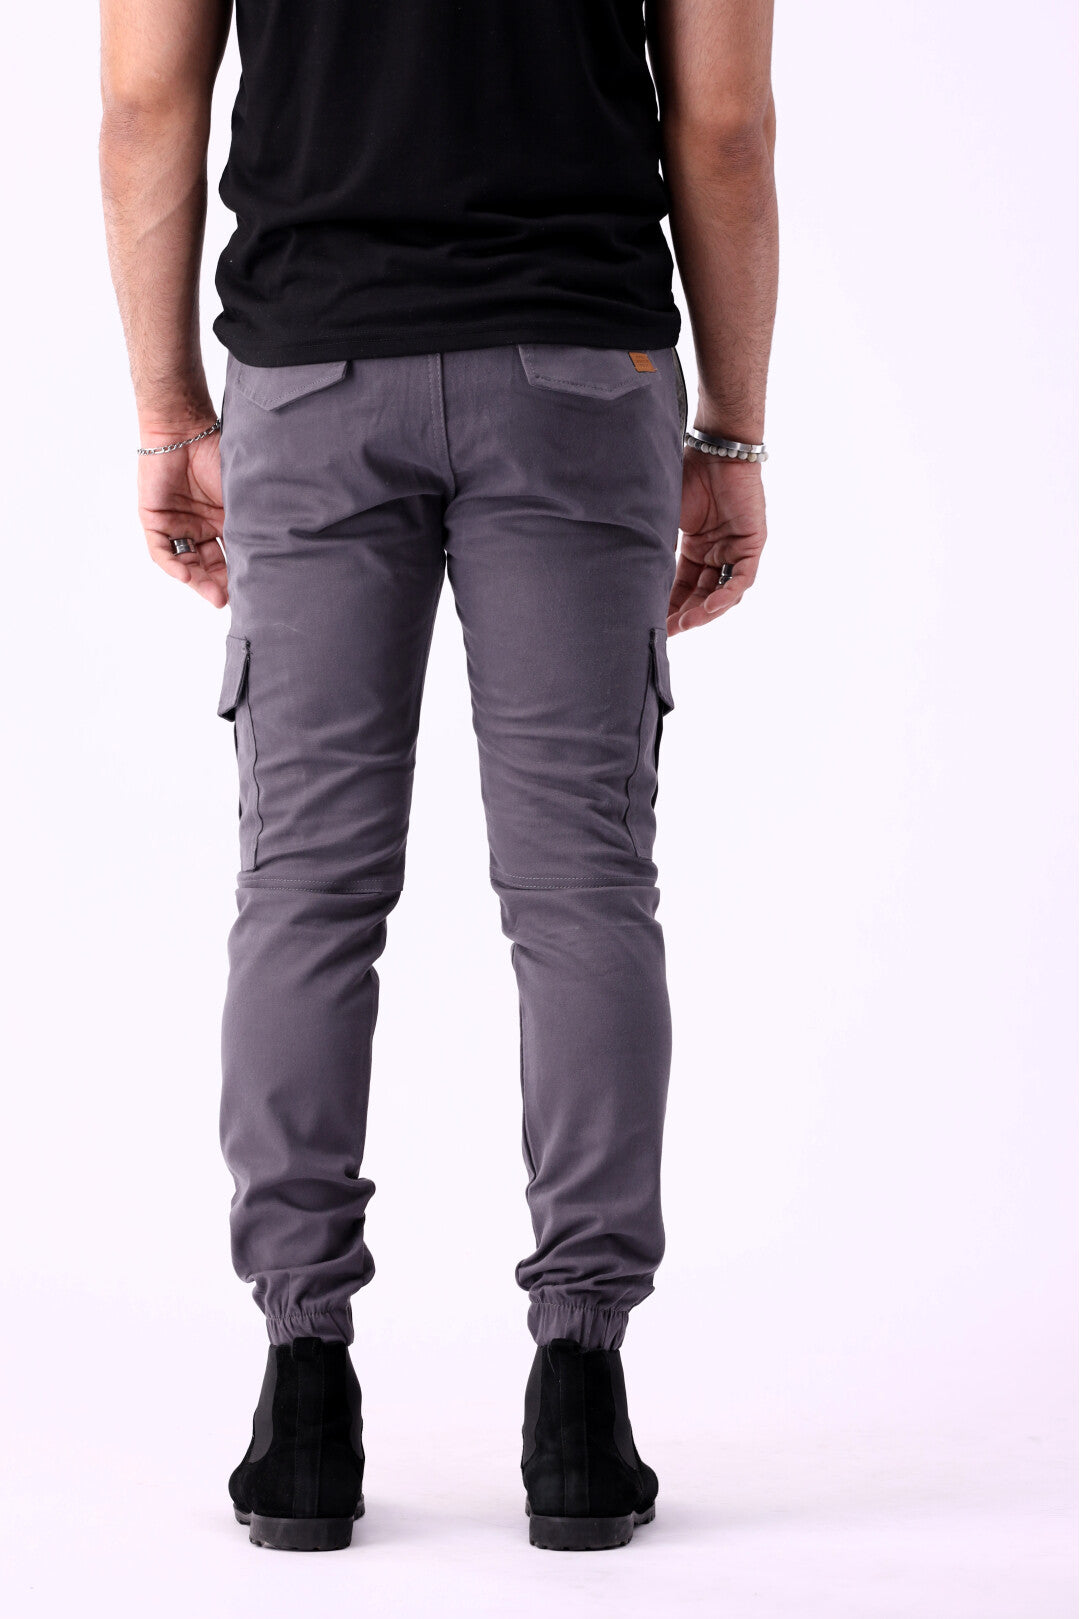 Cargo Six Pocket Trousers for Men - Grey 6 Pocket Cargo Pant